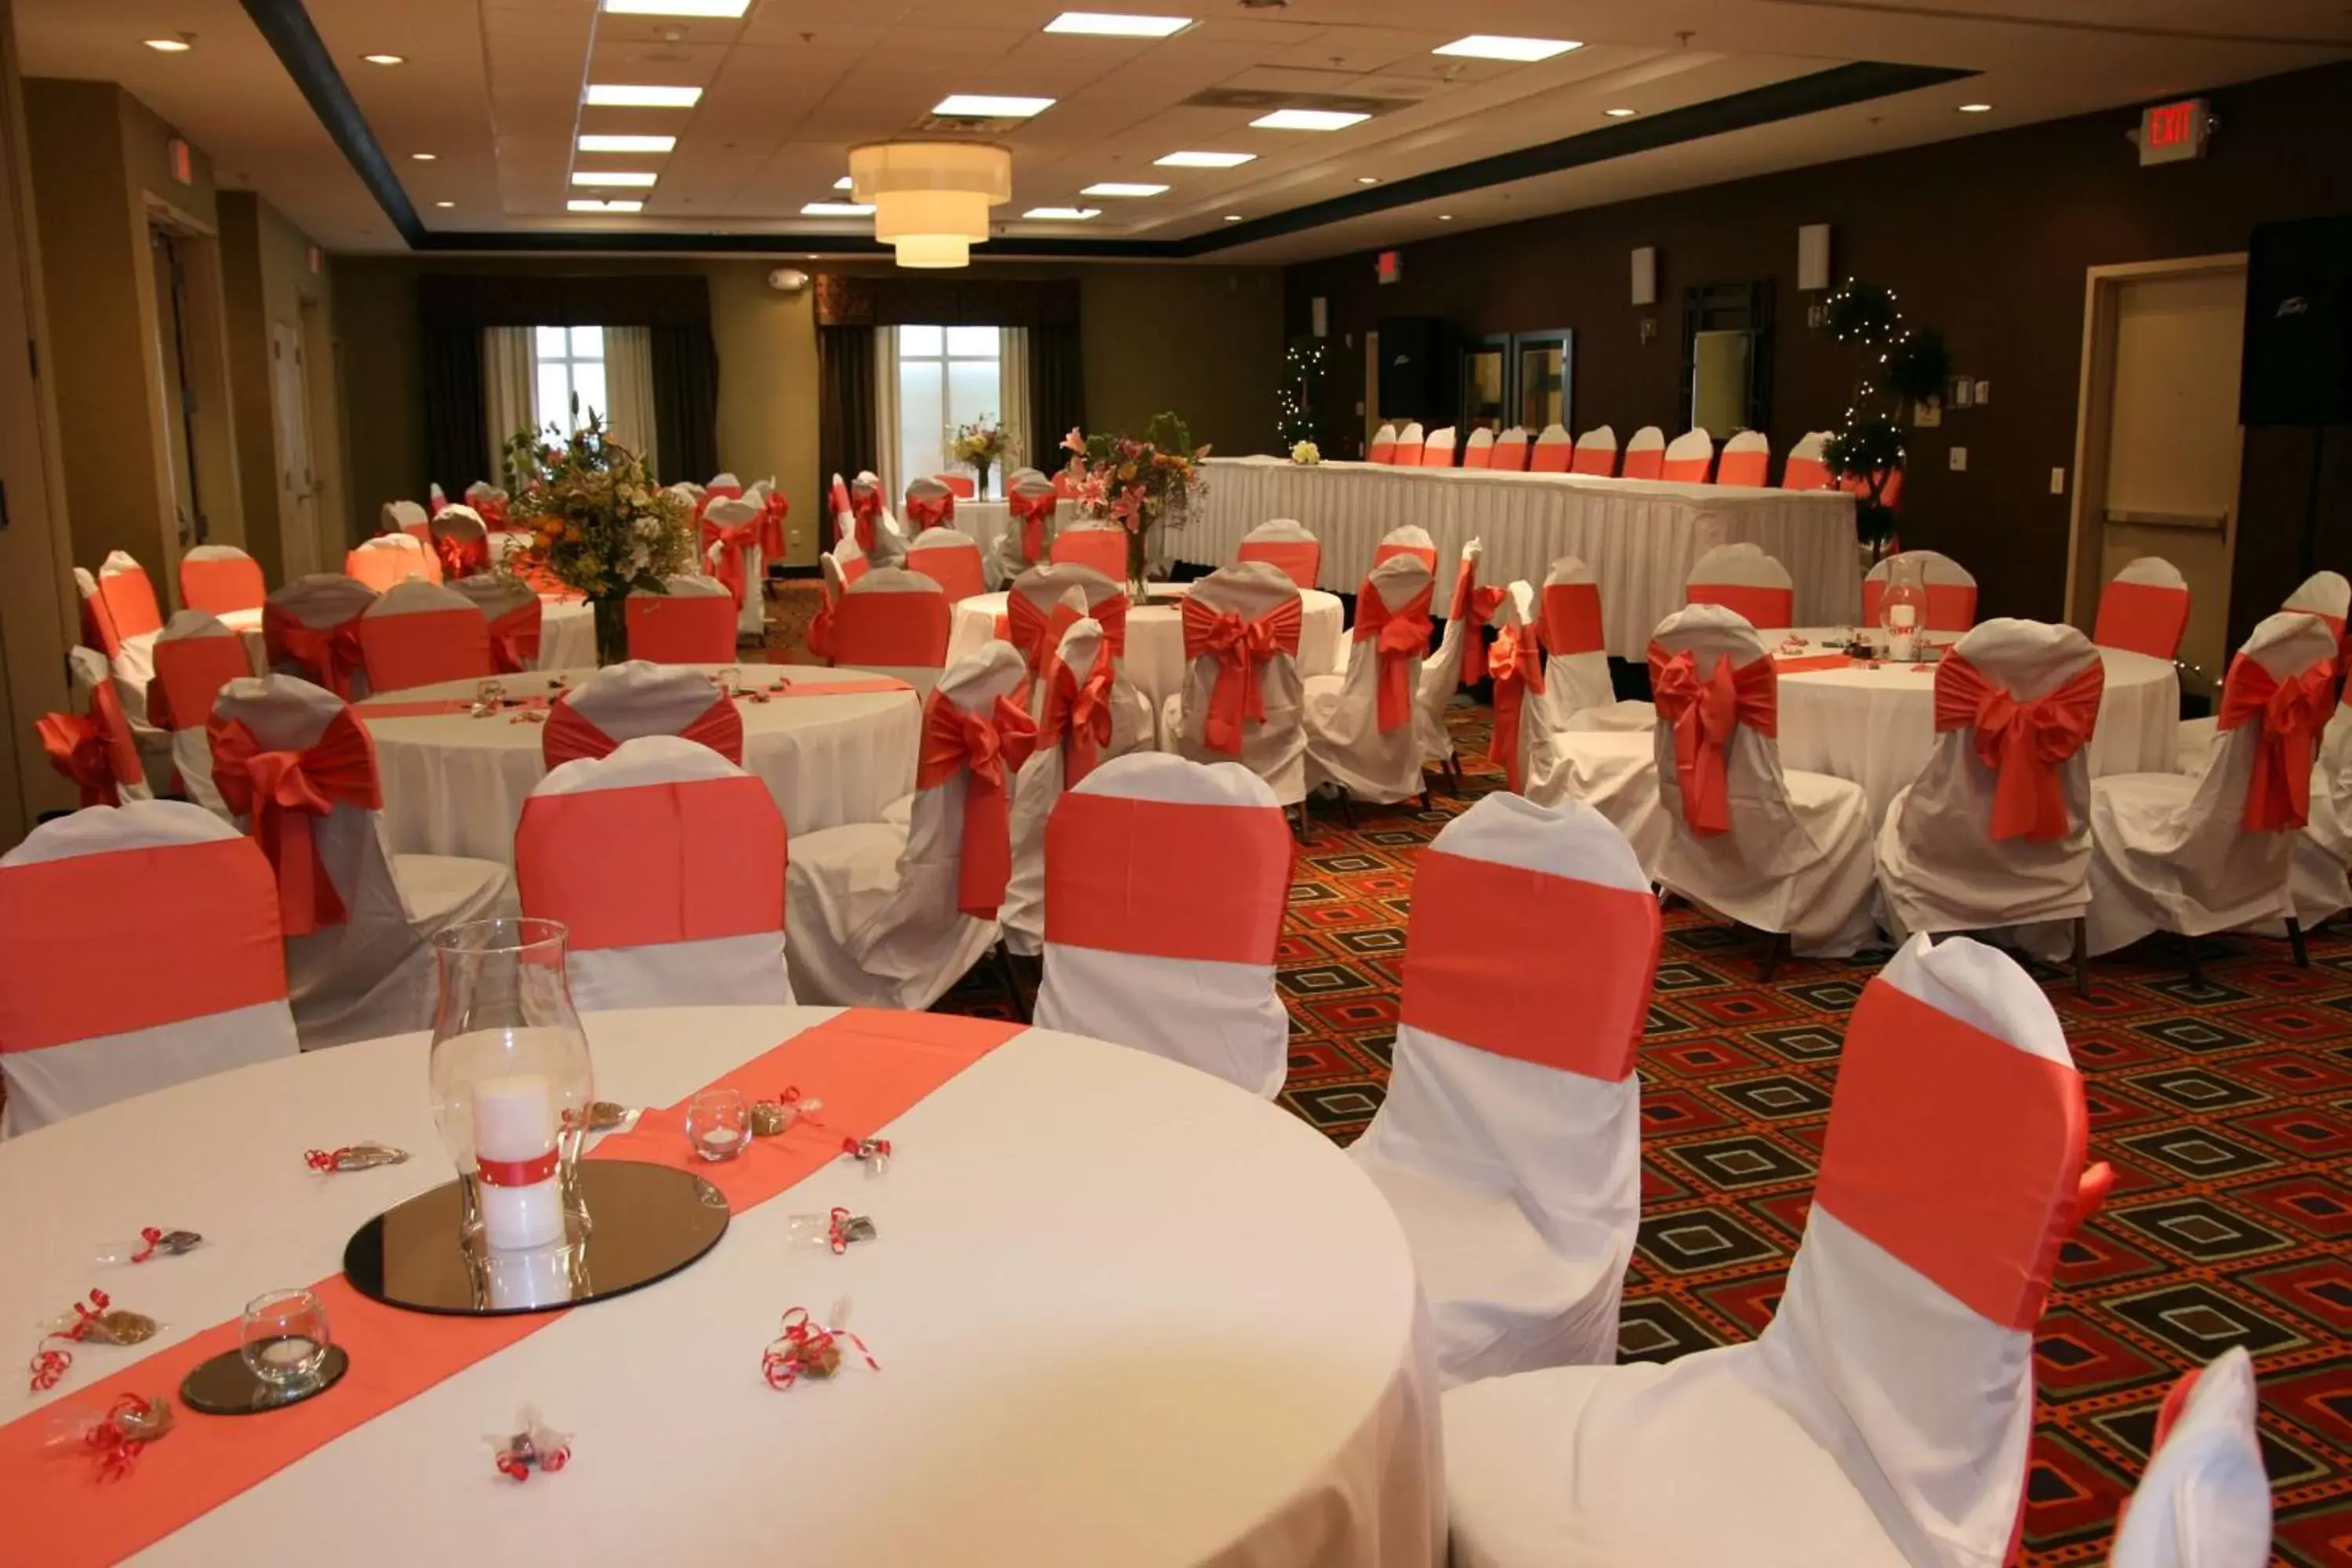 Meeting/conference room, Banquet Facilities in Hilton Garden Inn Birmingham/Trussville